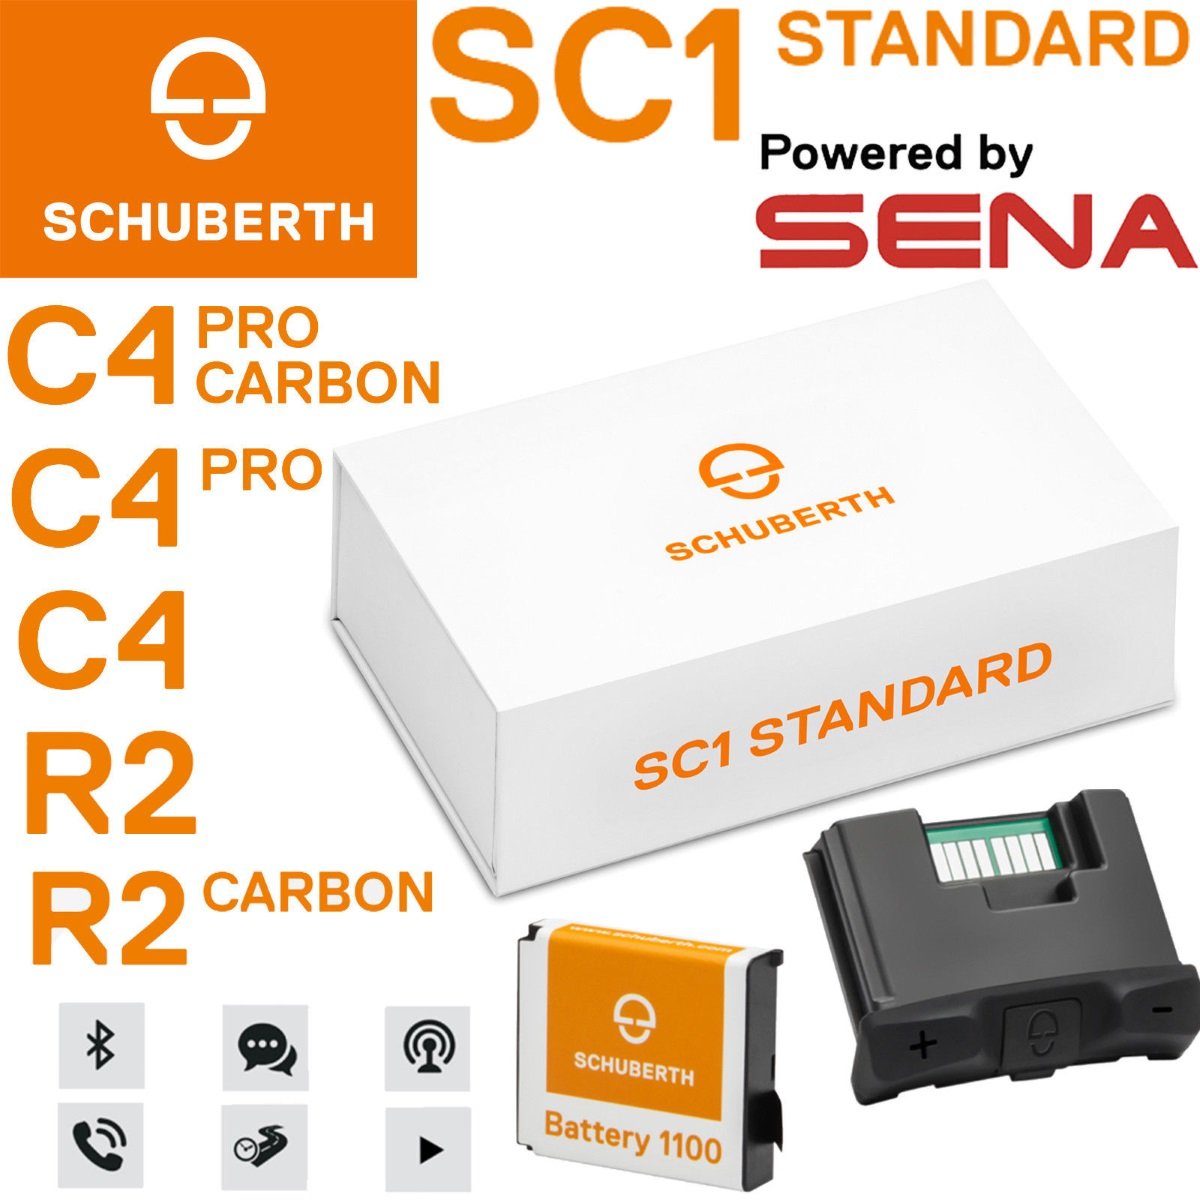 Bluetooth interkom SC1 Standard pro přilby Schuberth C4/R2